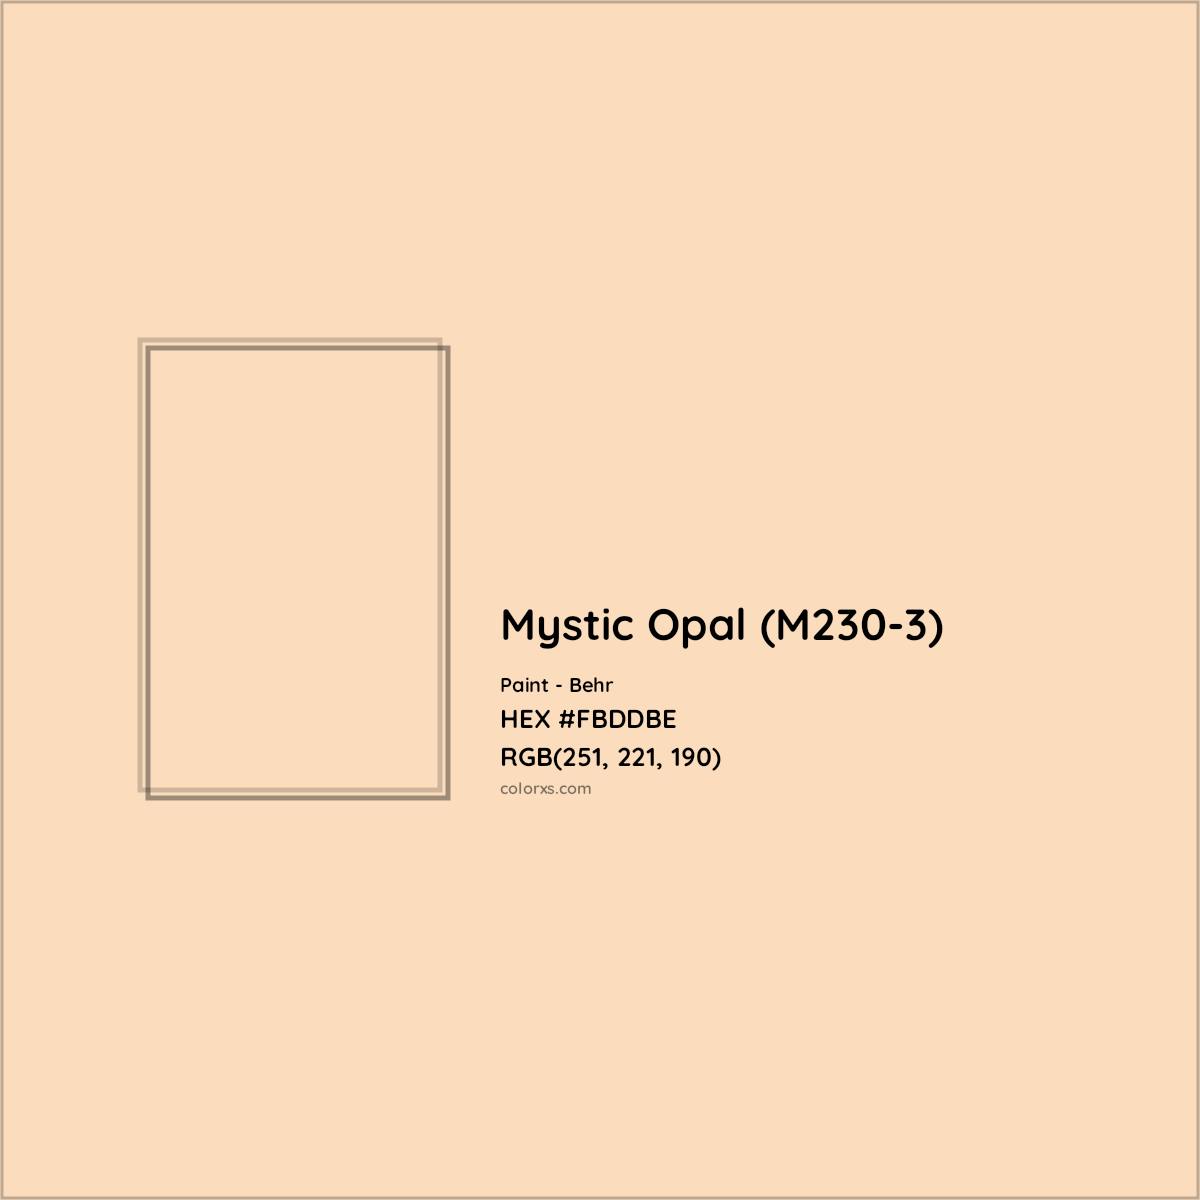 HEX #FBDDBE Mystic Opal (M230-3) Paint Behr - Color Code